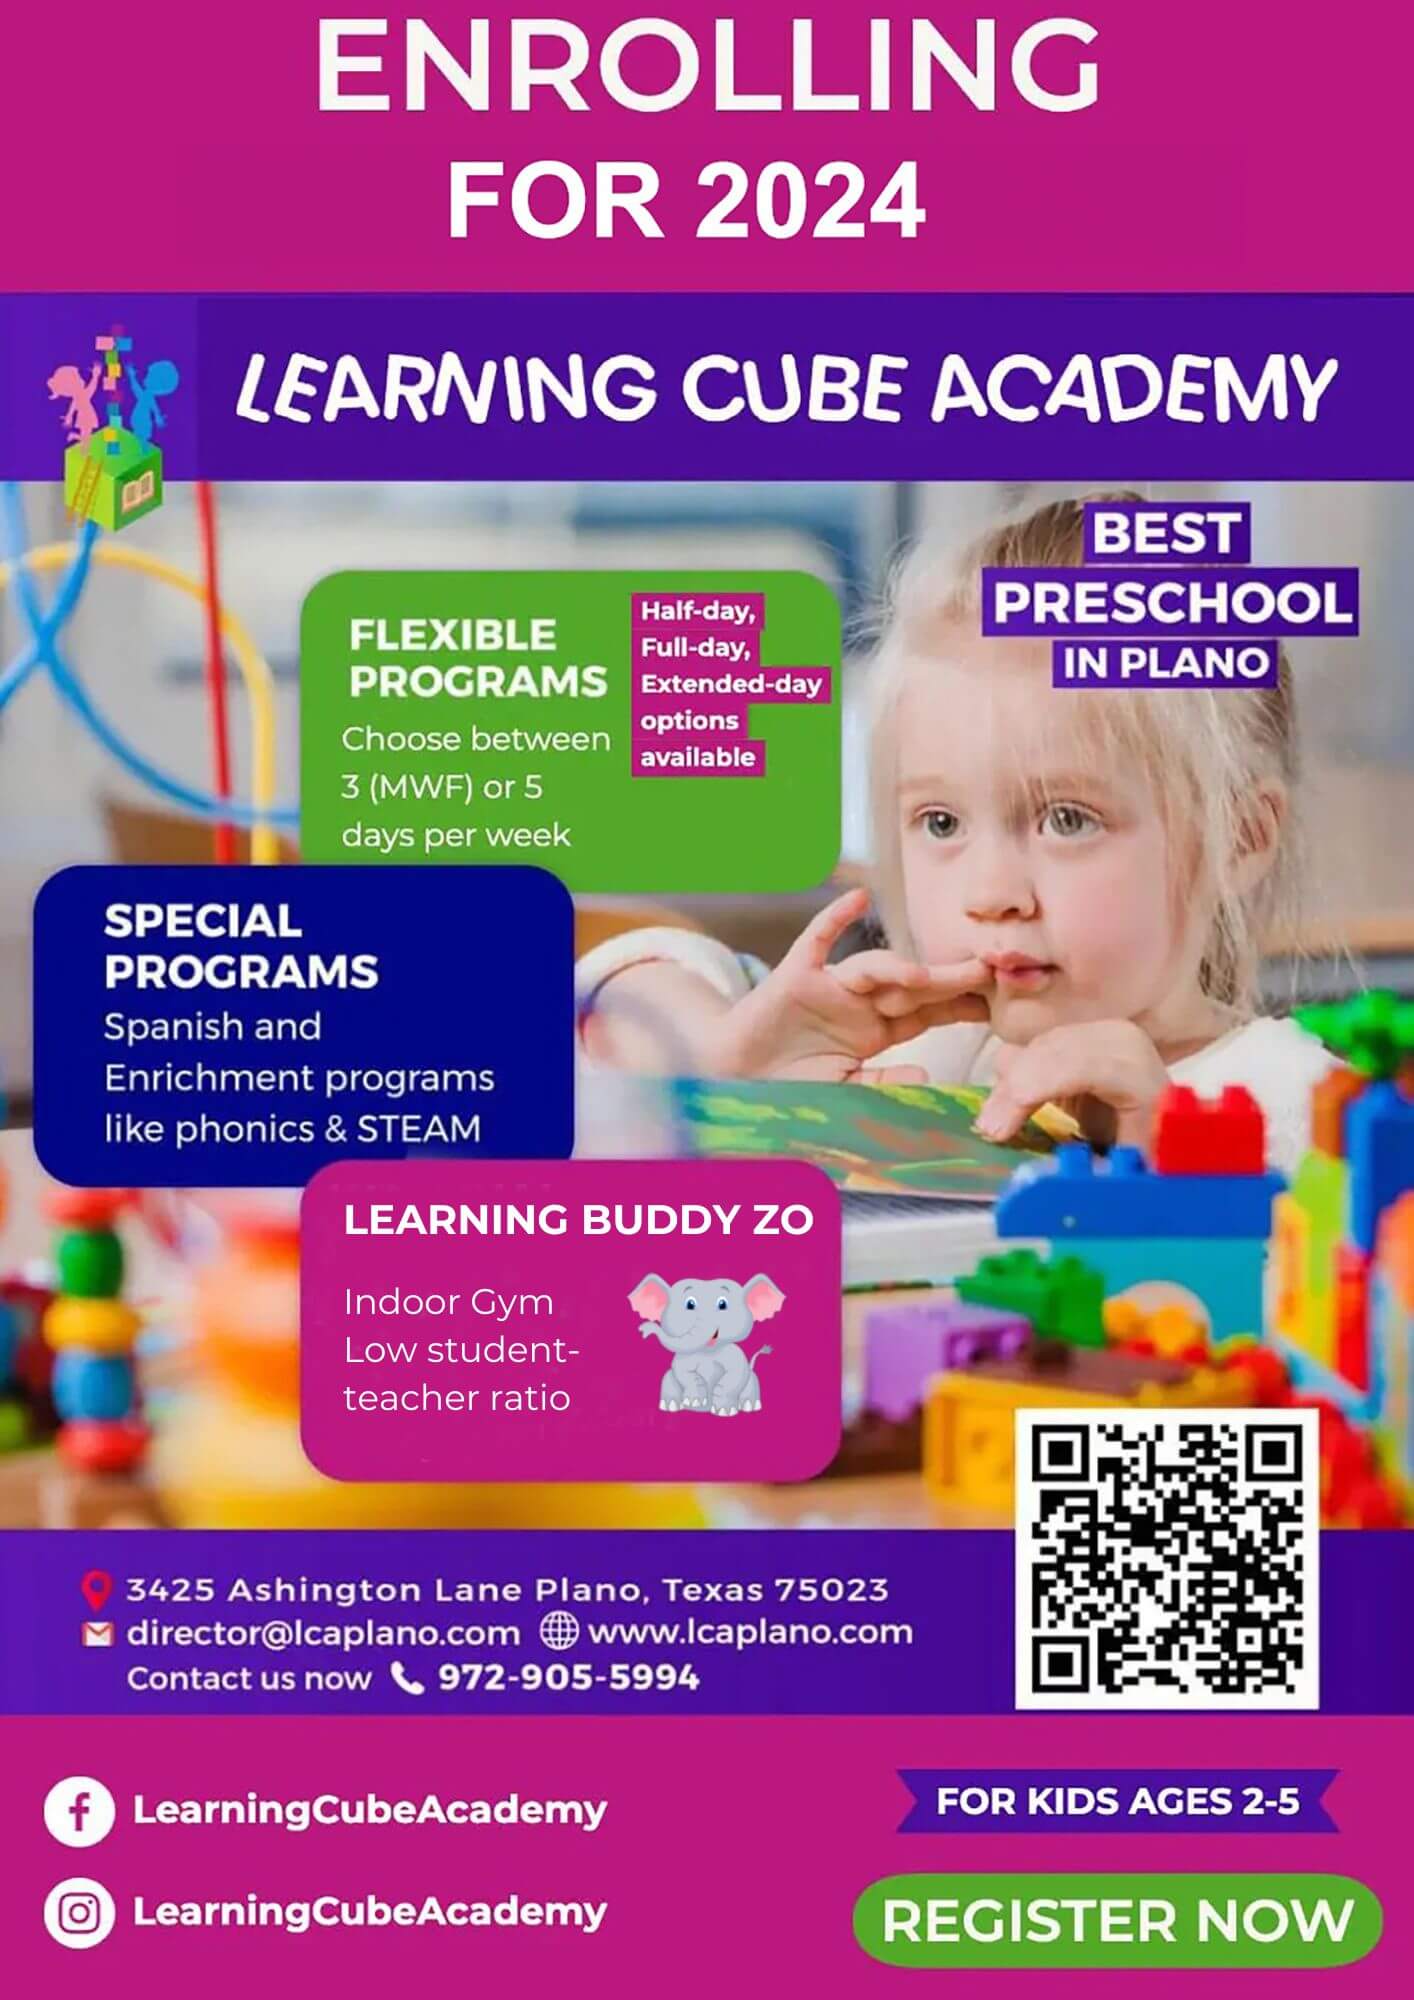 Learning-Cube-Academy-LCA-Plano-Enrolling-for-2024-Best-Preschool-in-Plano-Texas.jpg